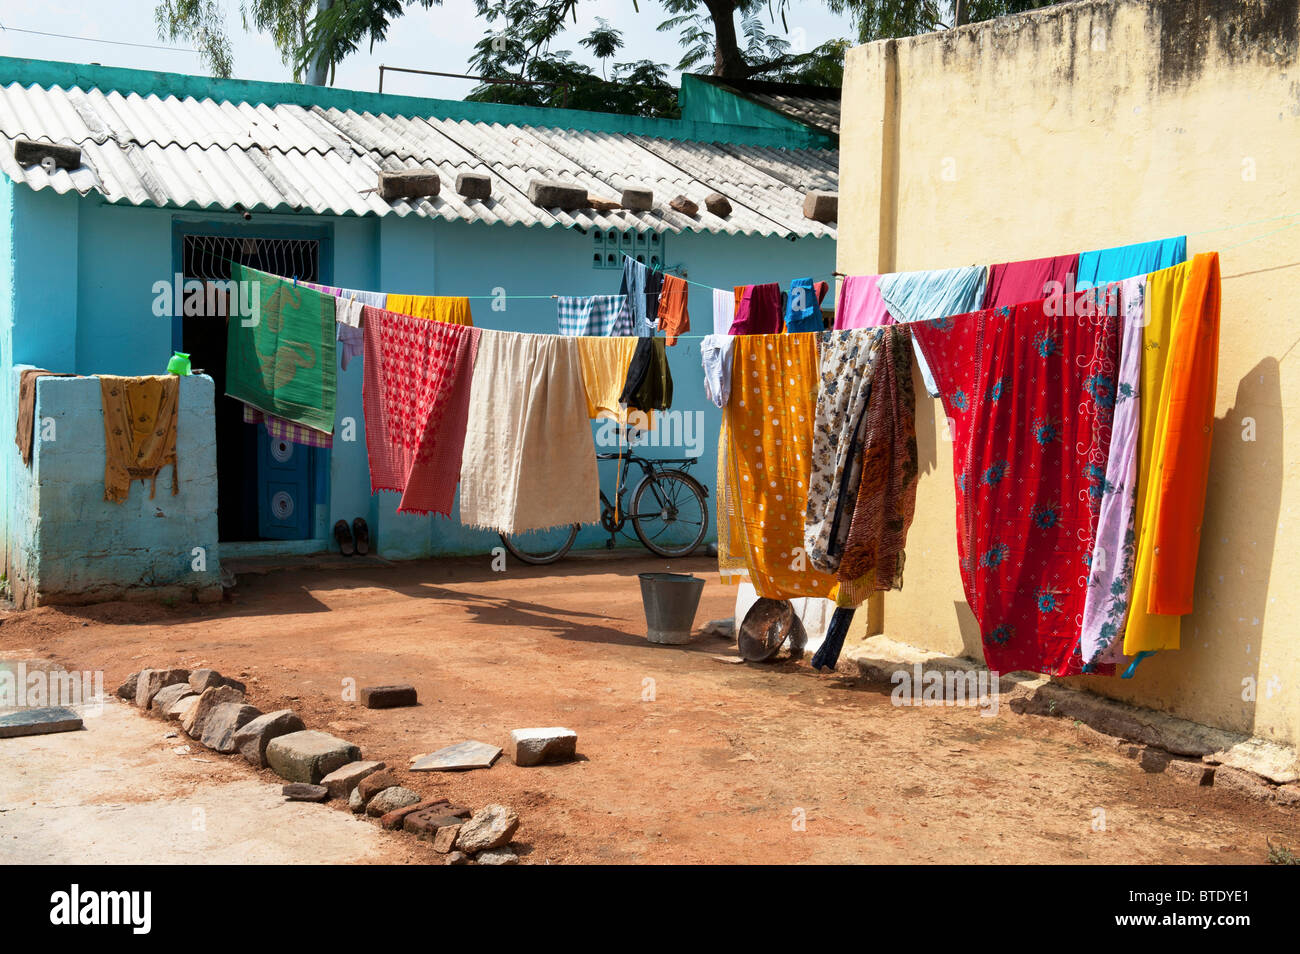 https://c8.alamy.com/comp/BTDYE1/colourful-clothes-on-a-washing-line-outside-a-rural-indian-home-BTDYE1.jpg